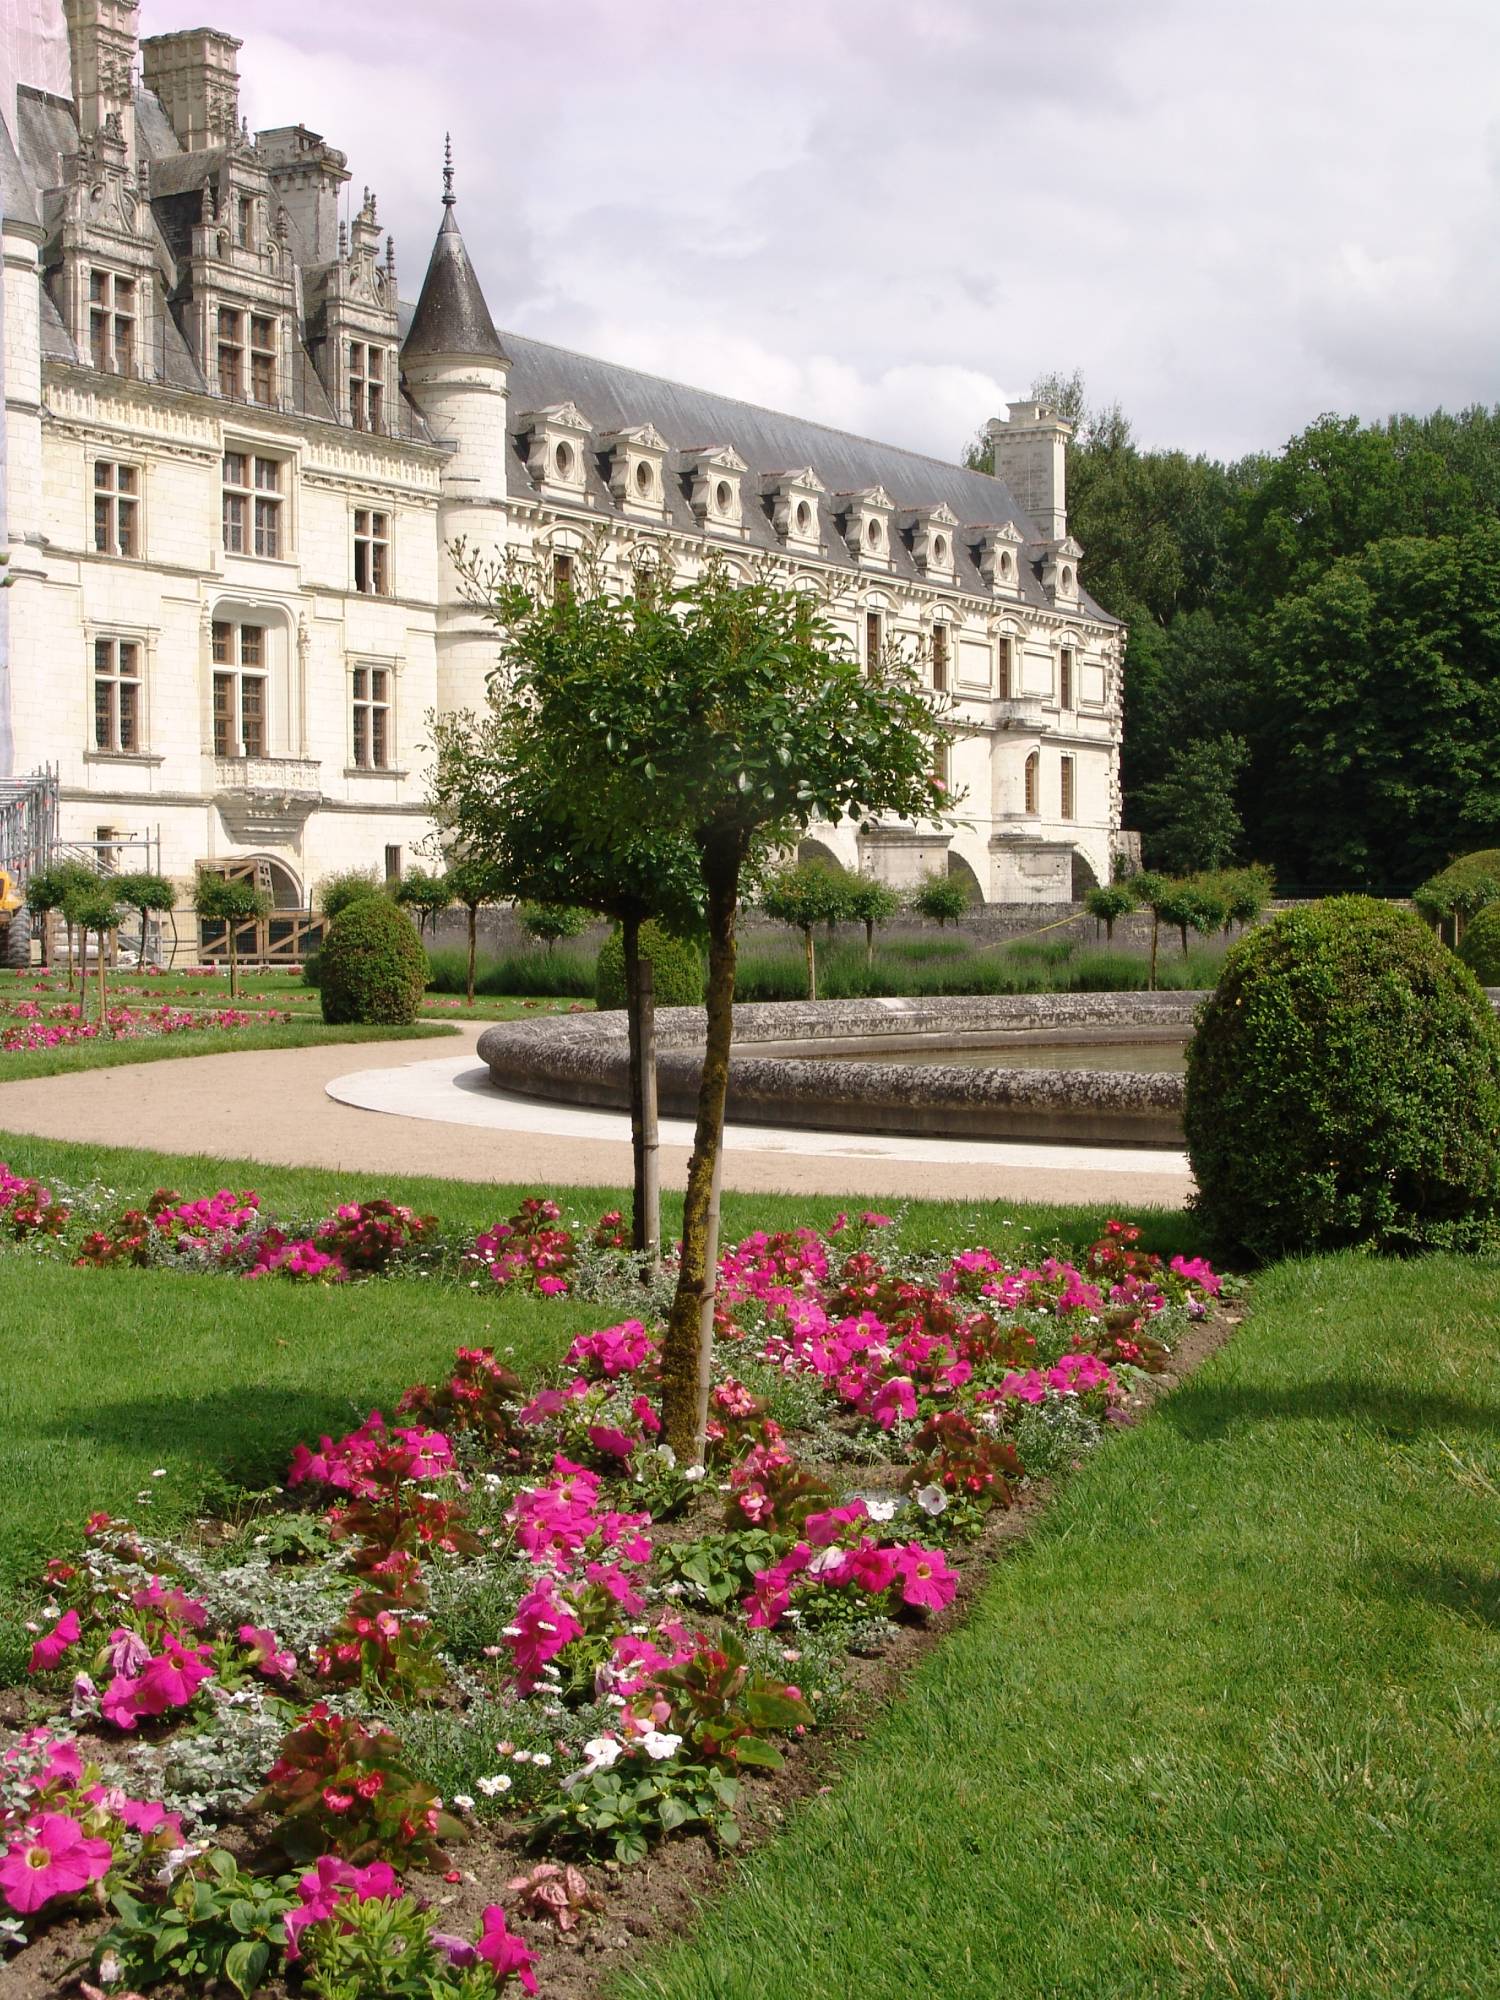 Explore the castles of the Loire Valley |PassPorter.com